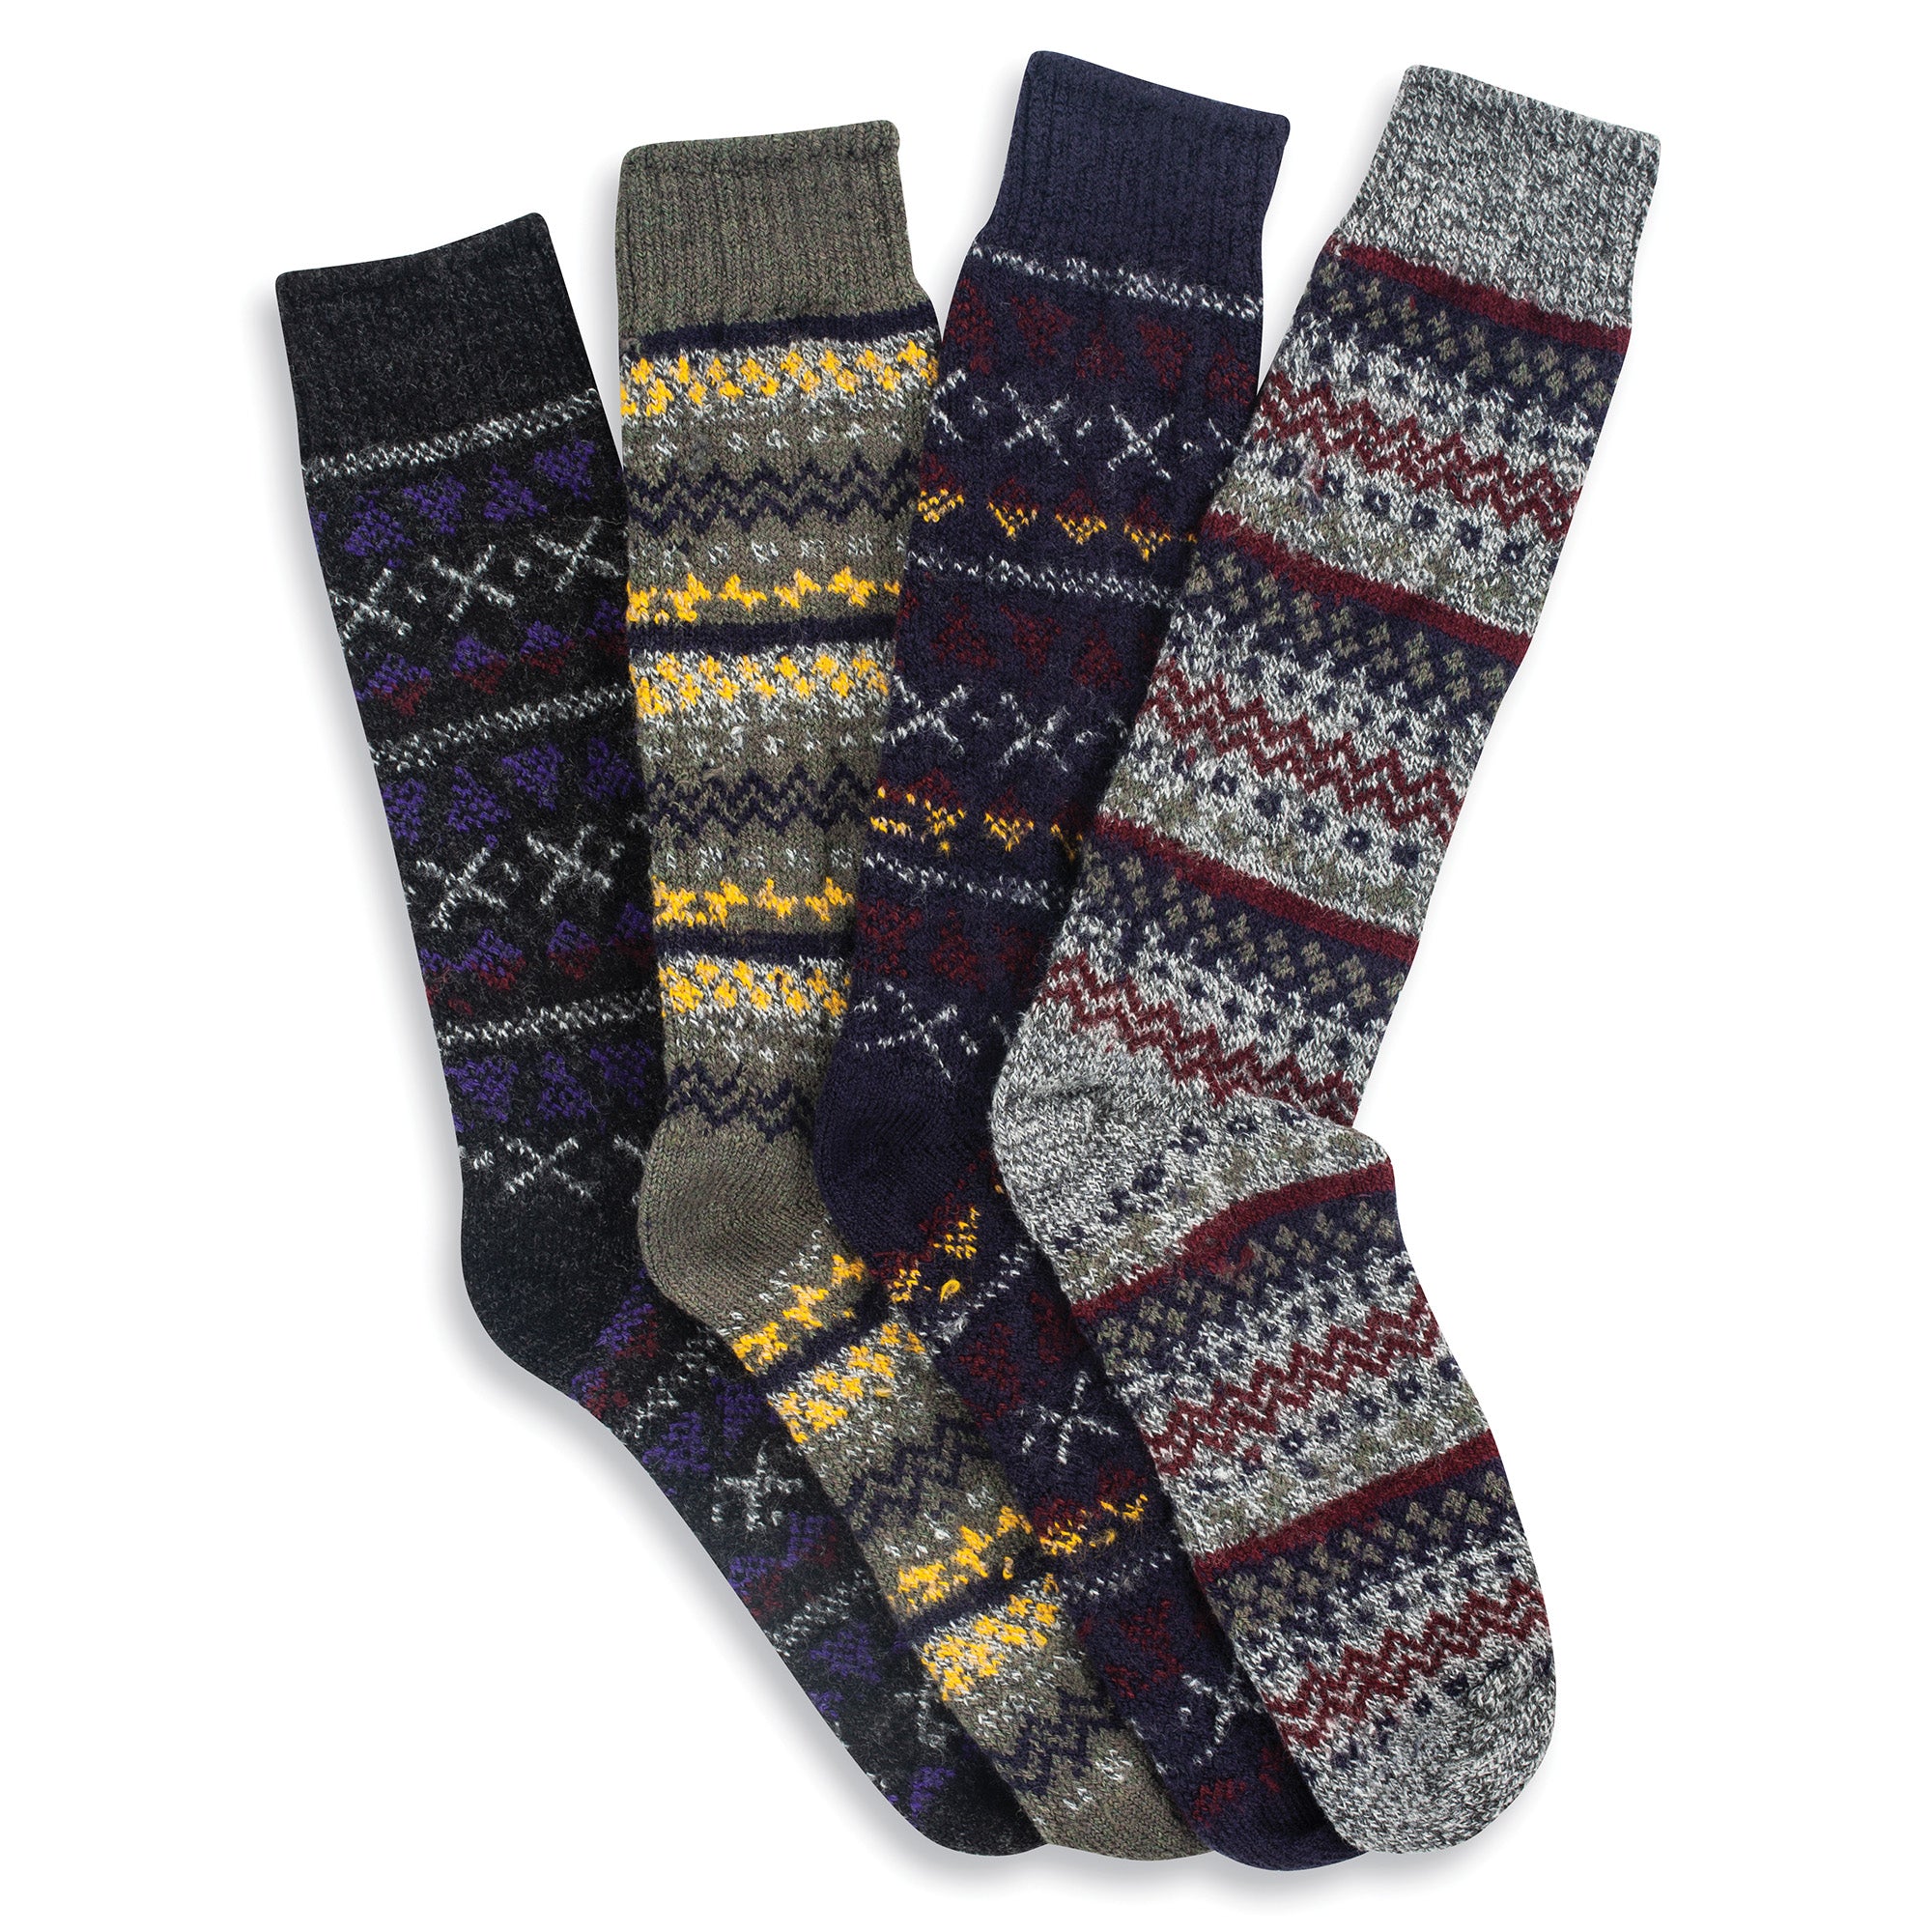 four colors of men's Fair Isle merino wool socks from Boardroom Socks